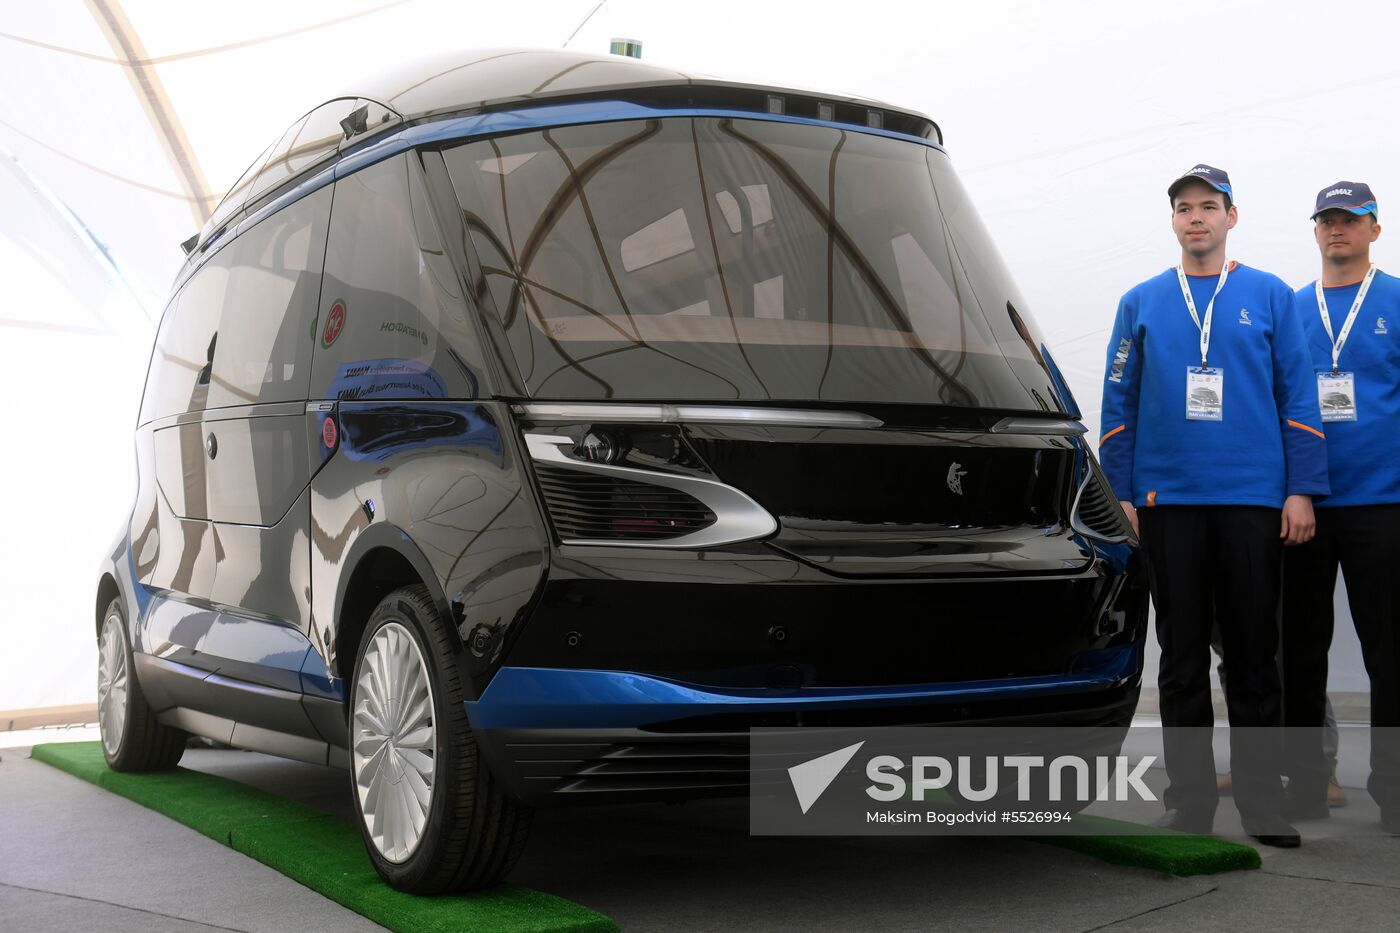 Kamaz presents SHUTTLE unmanned electric bus